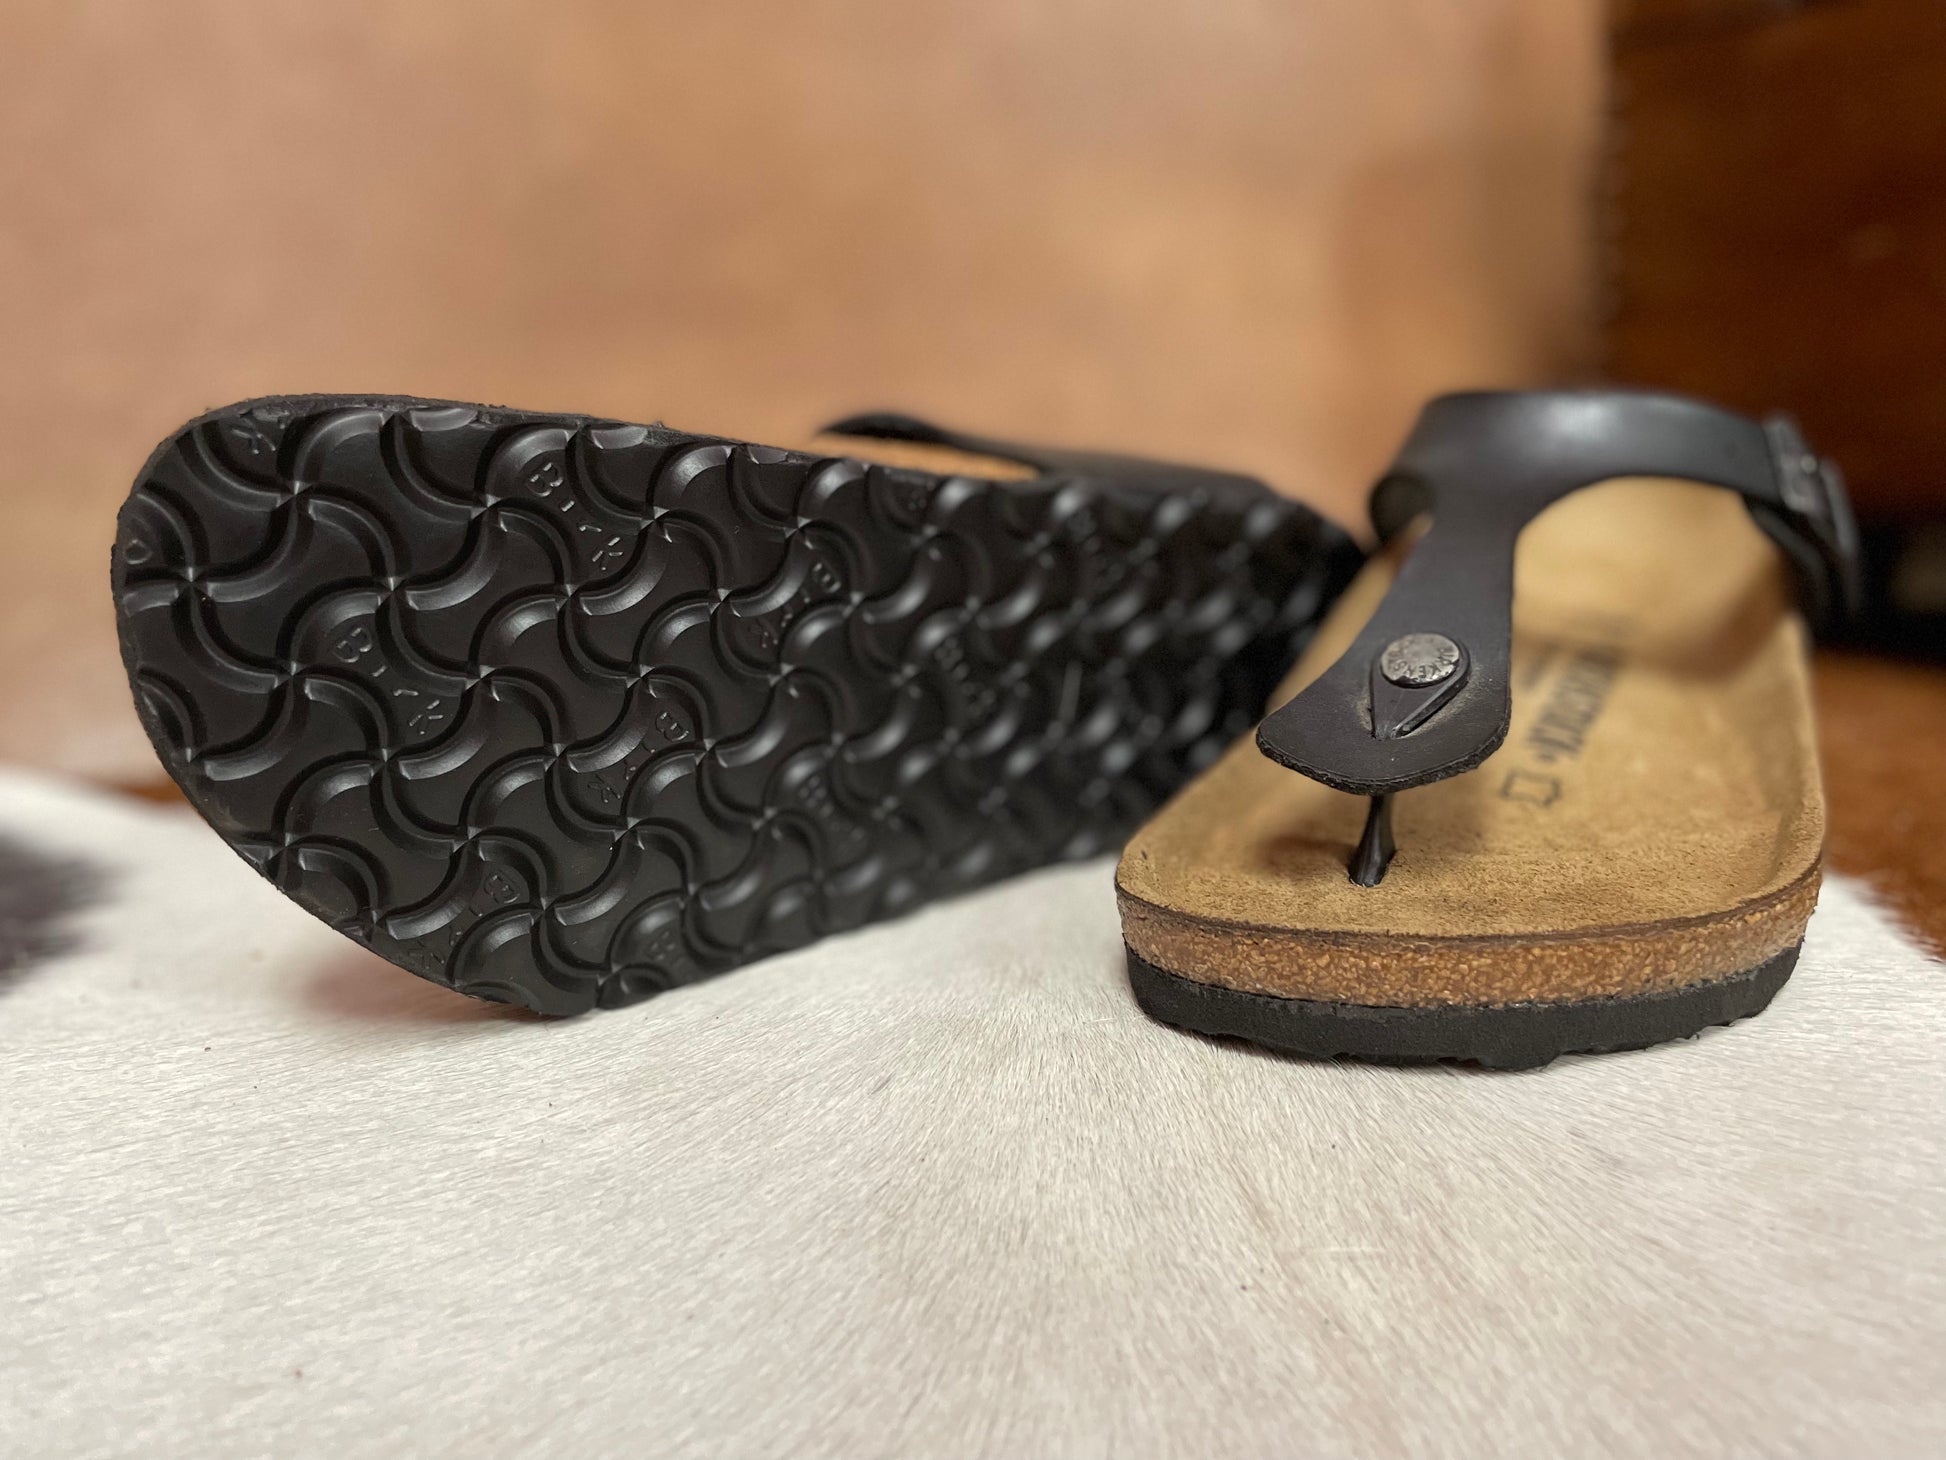 Birkenstock Gizeh sandals in black